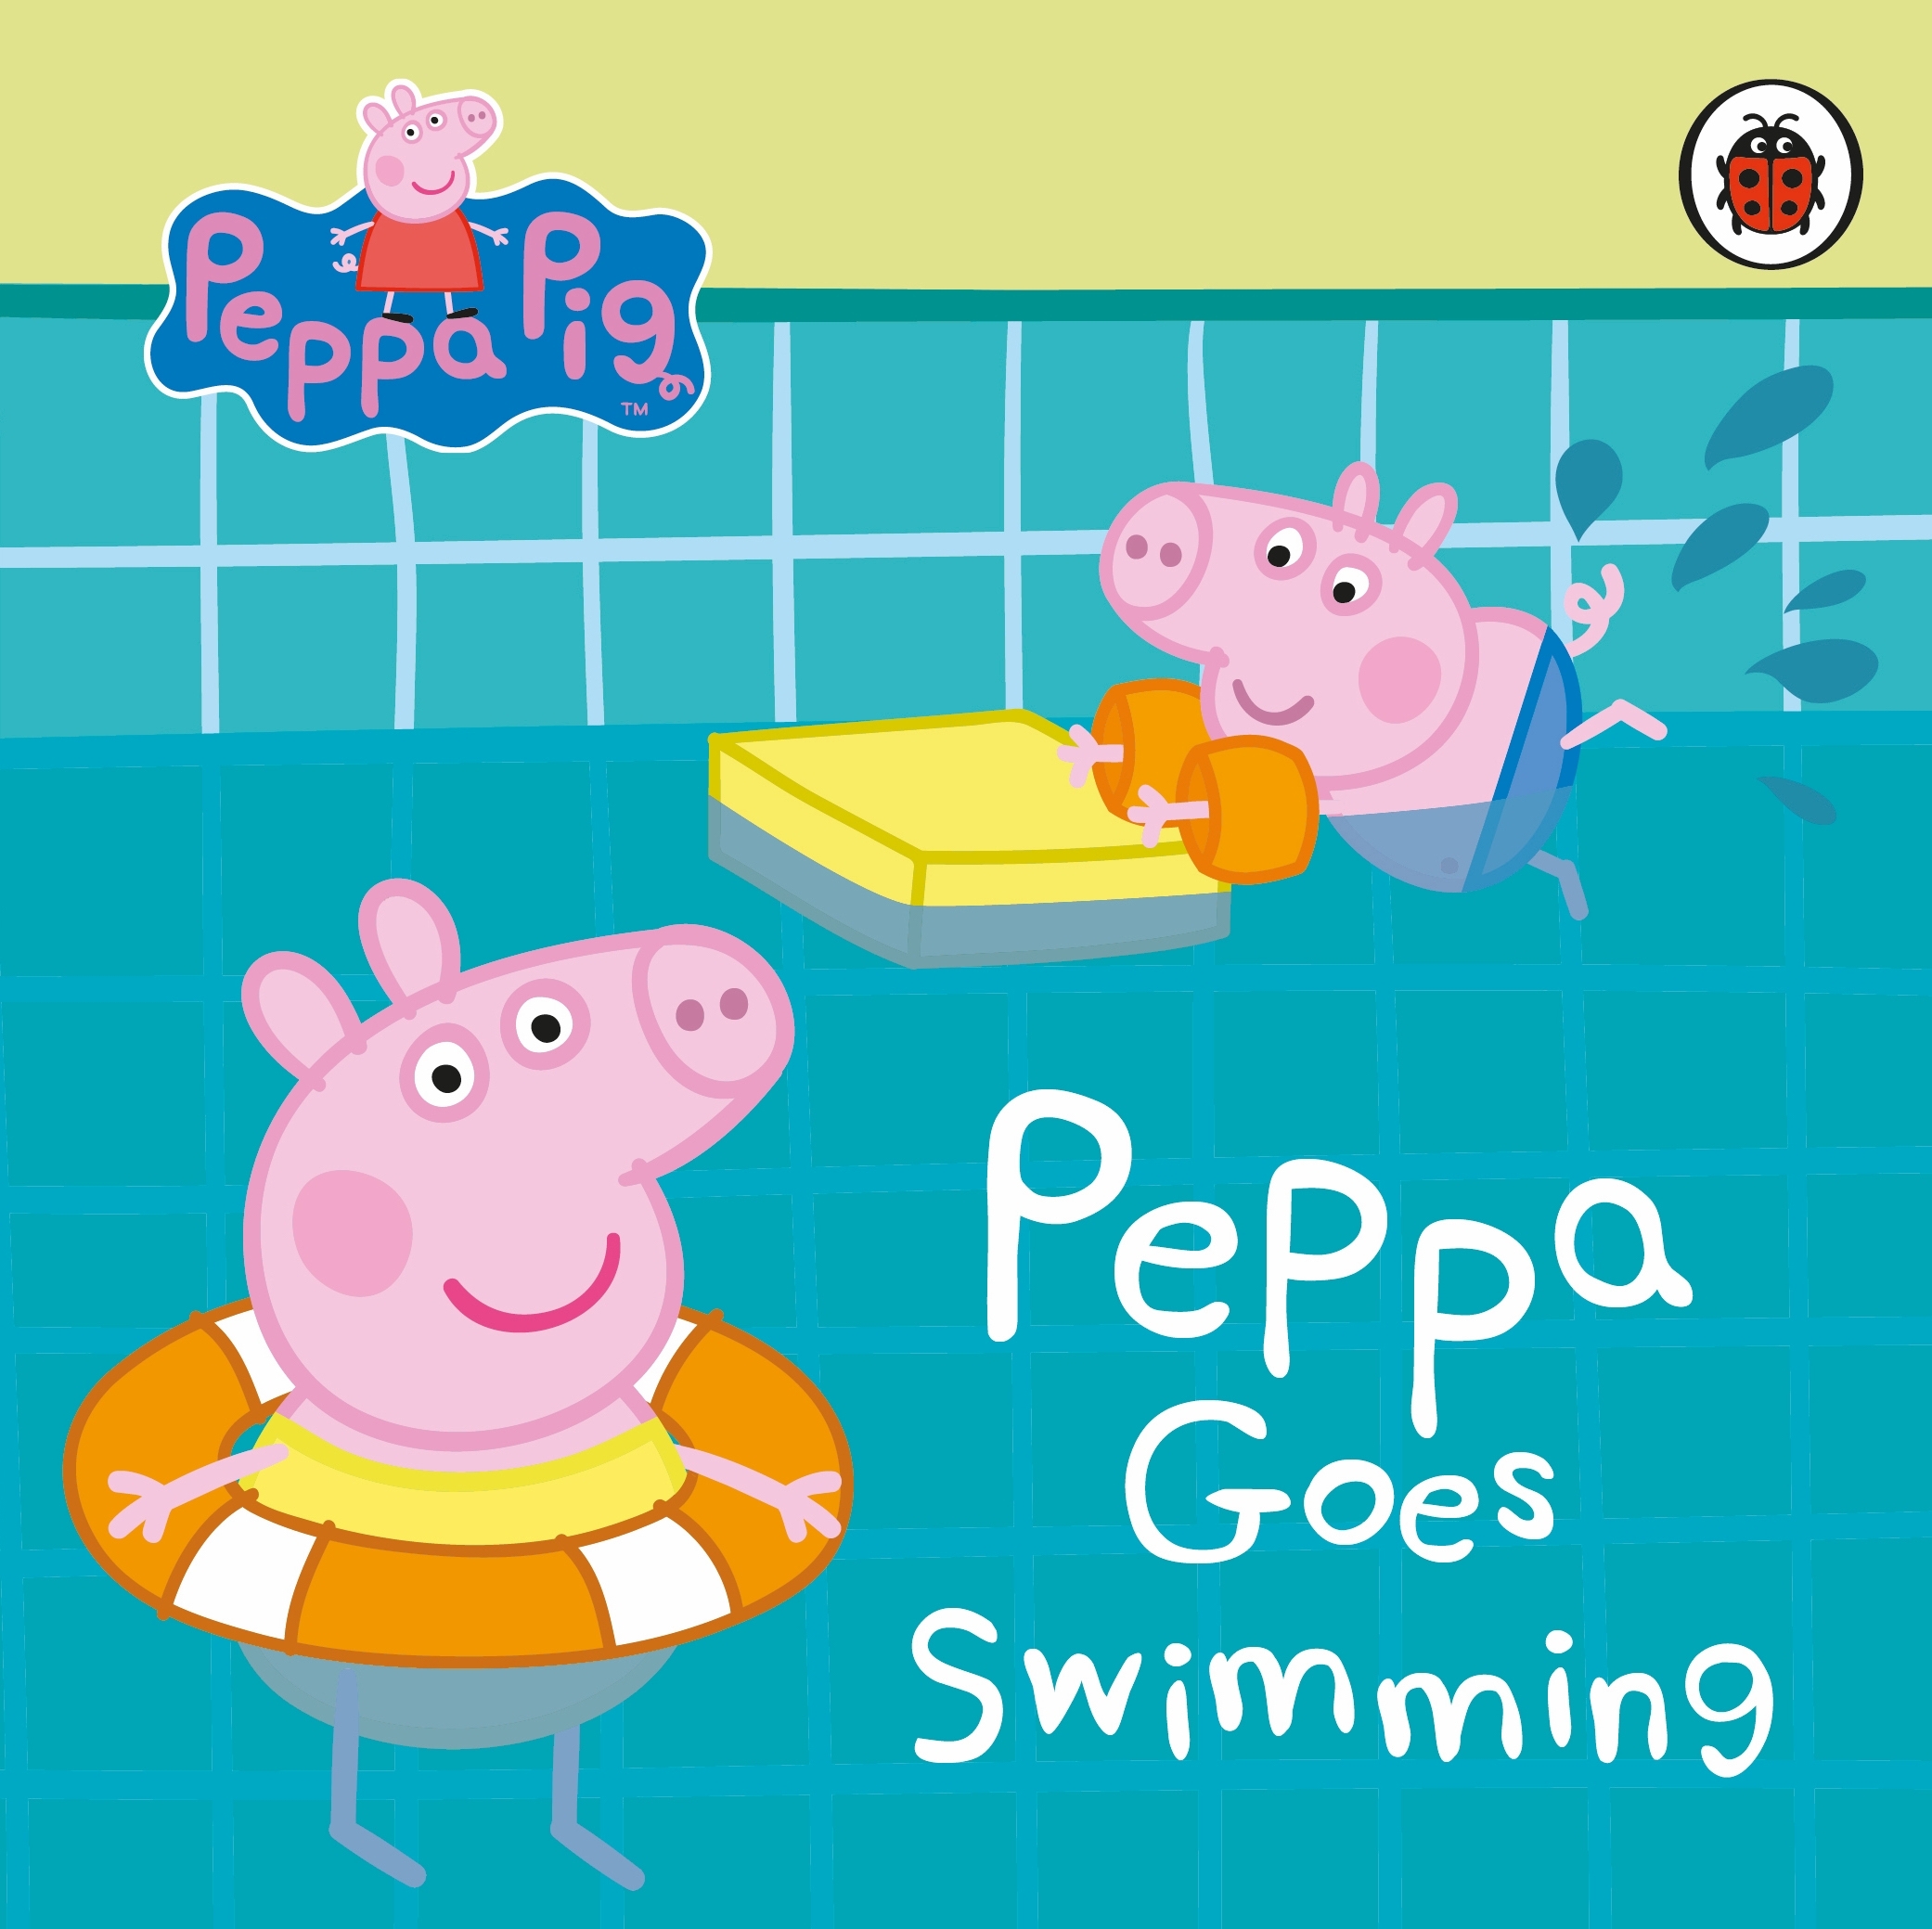 Peppa Pig: Peppa Goes Swimming by Peppa Pig - Penguin Books New Zealand